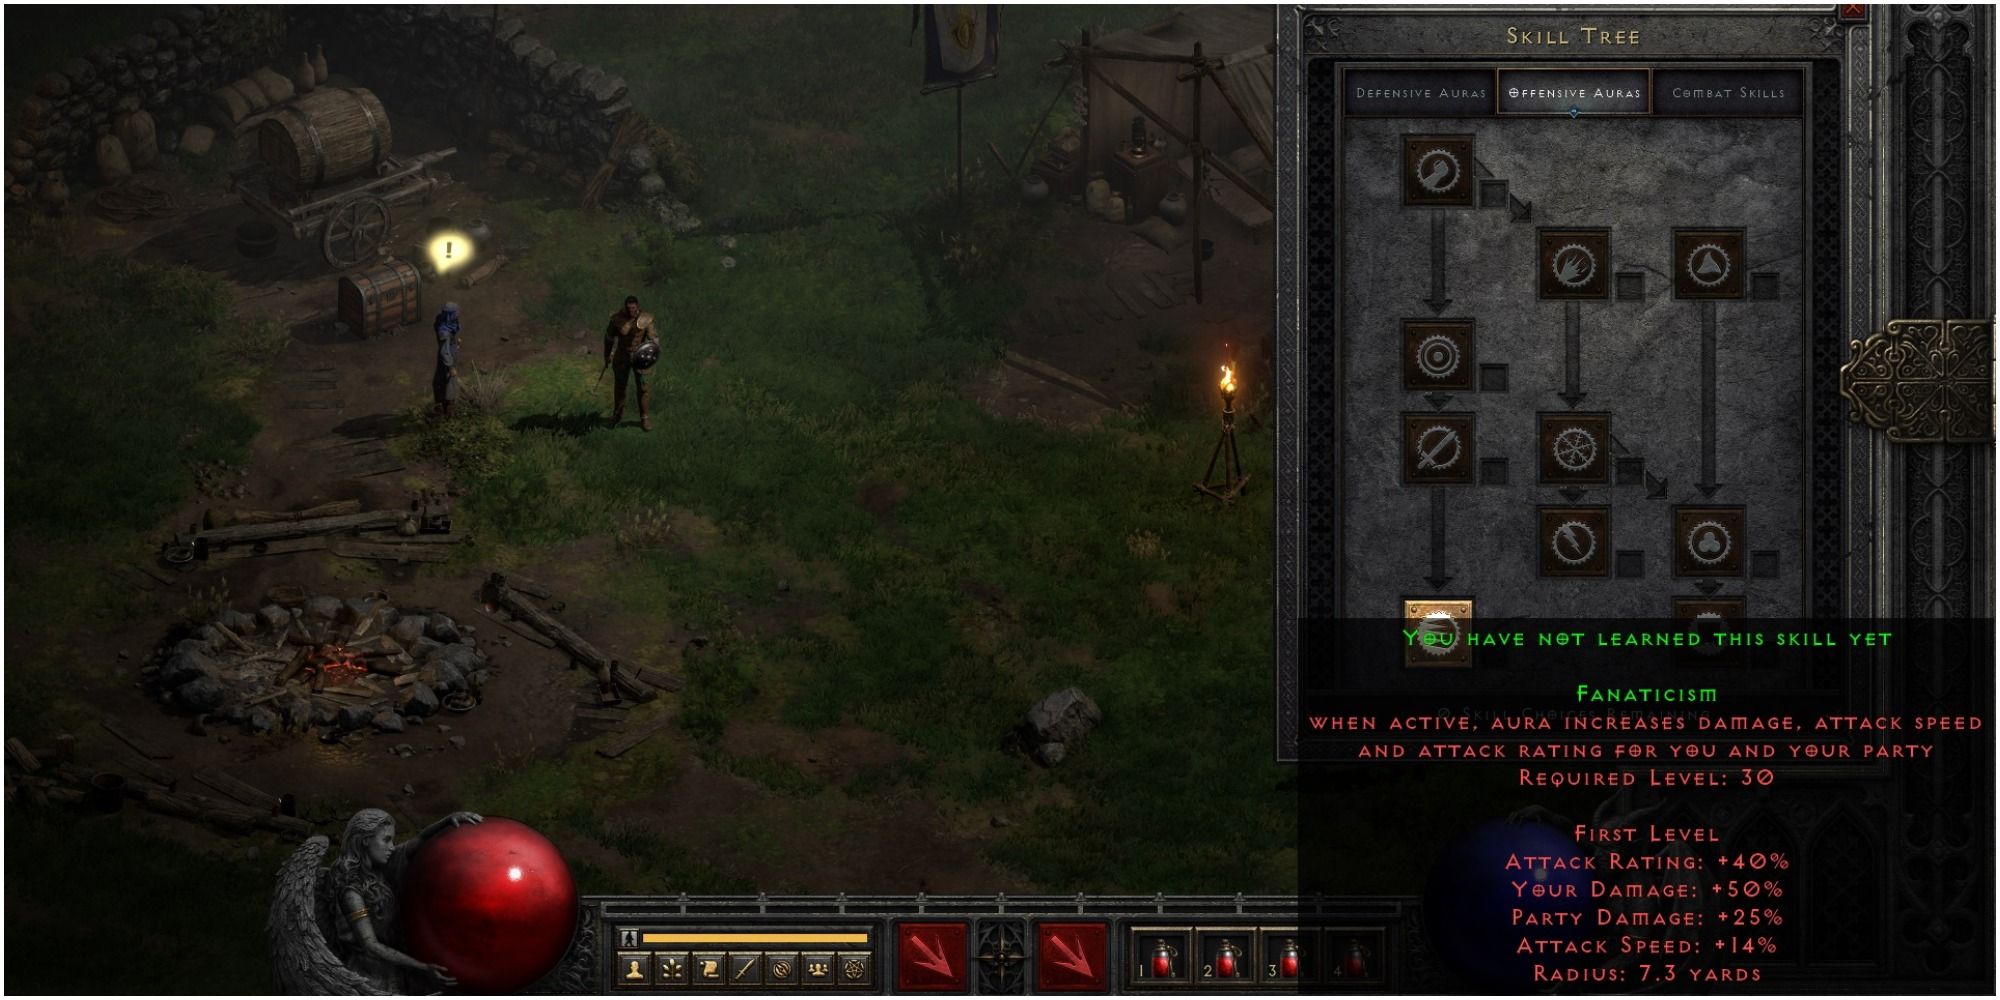 Diablo 2 Resurrected Fanaticism Description At Level One